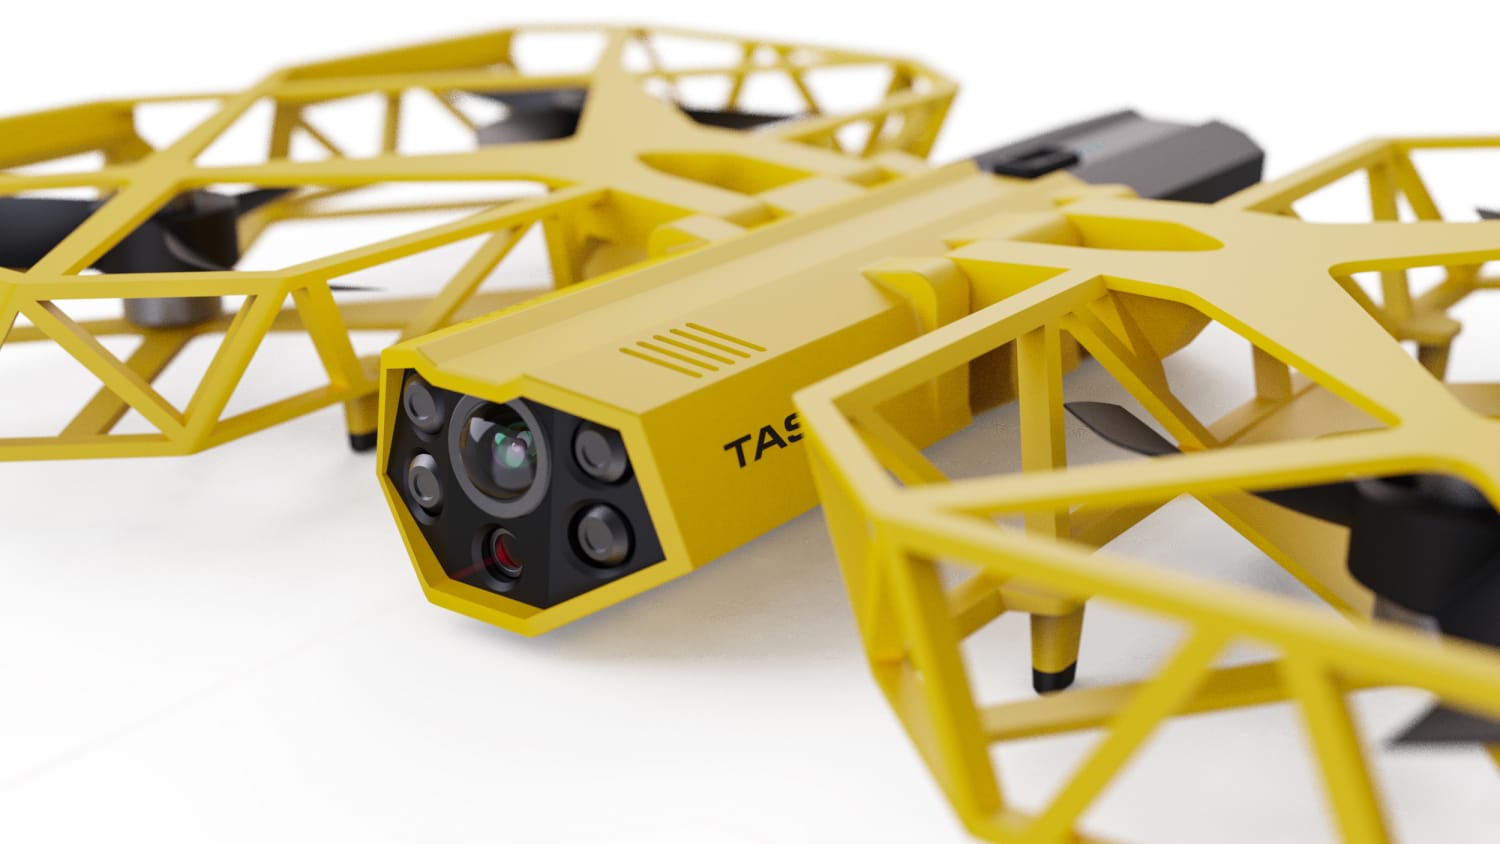 halts for Taser drone as 9 on ethics board resign